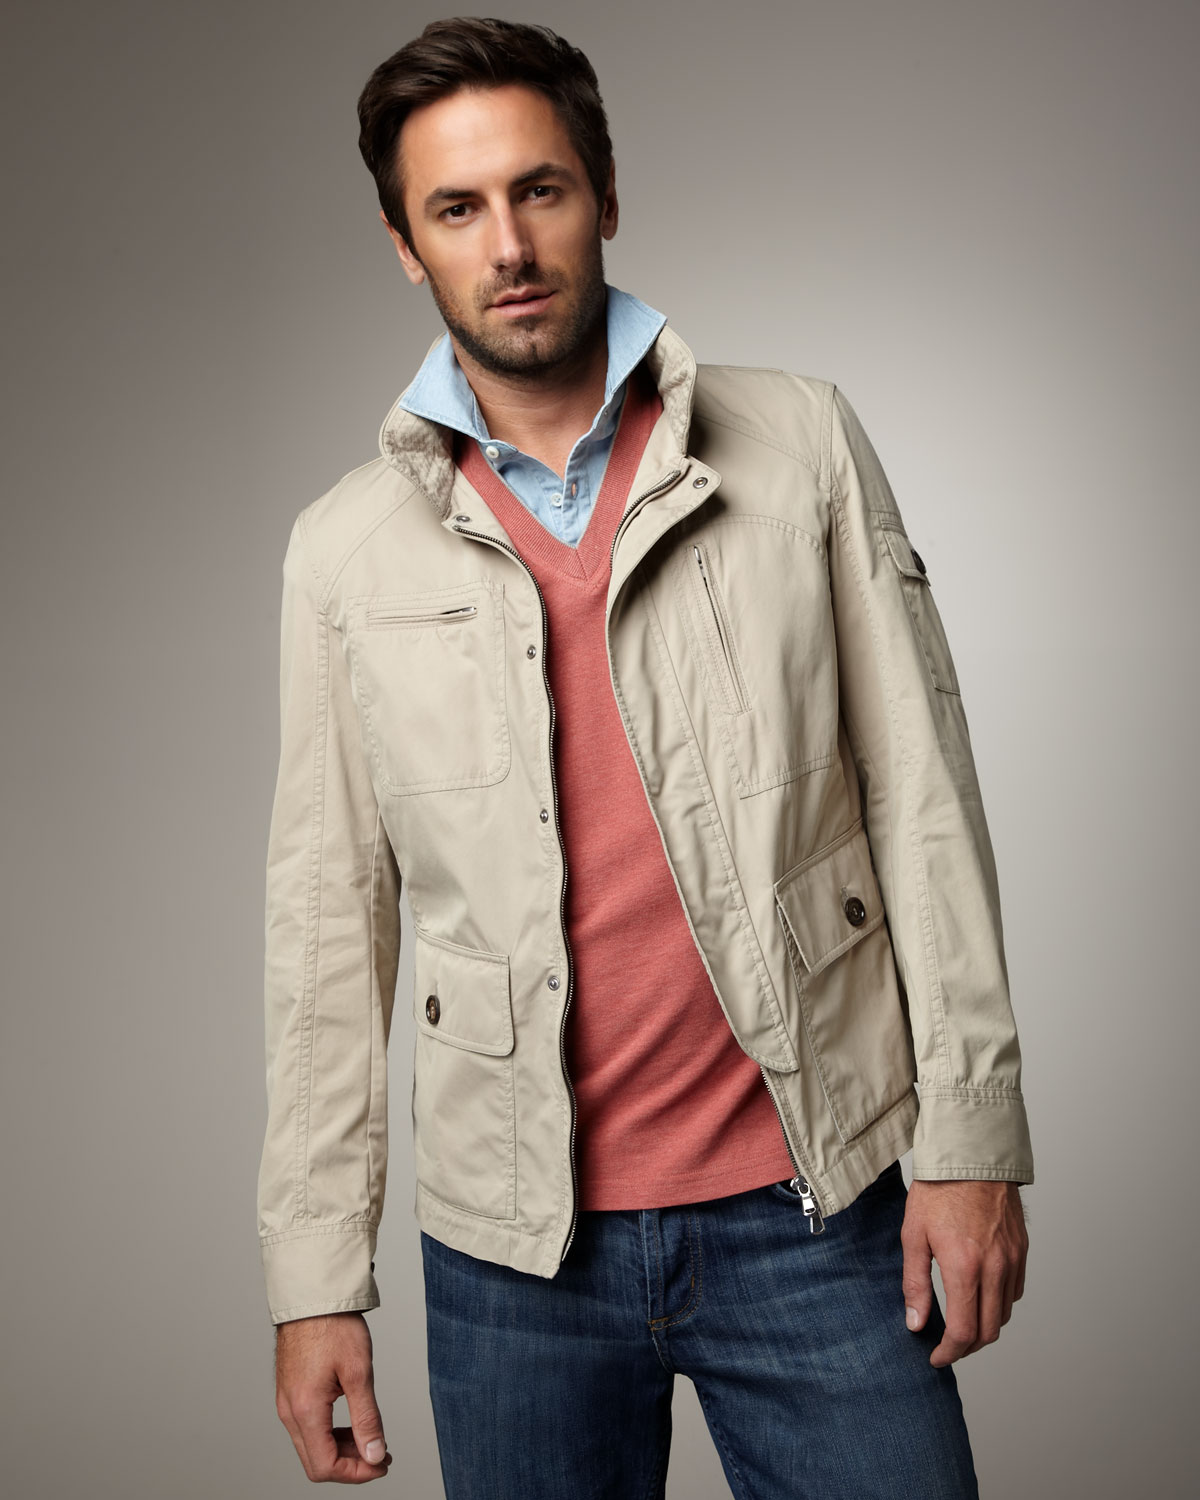 Lyst - Brunello Cucinelli Short Safari Jacket in Natural for Men